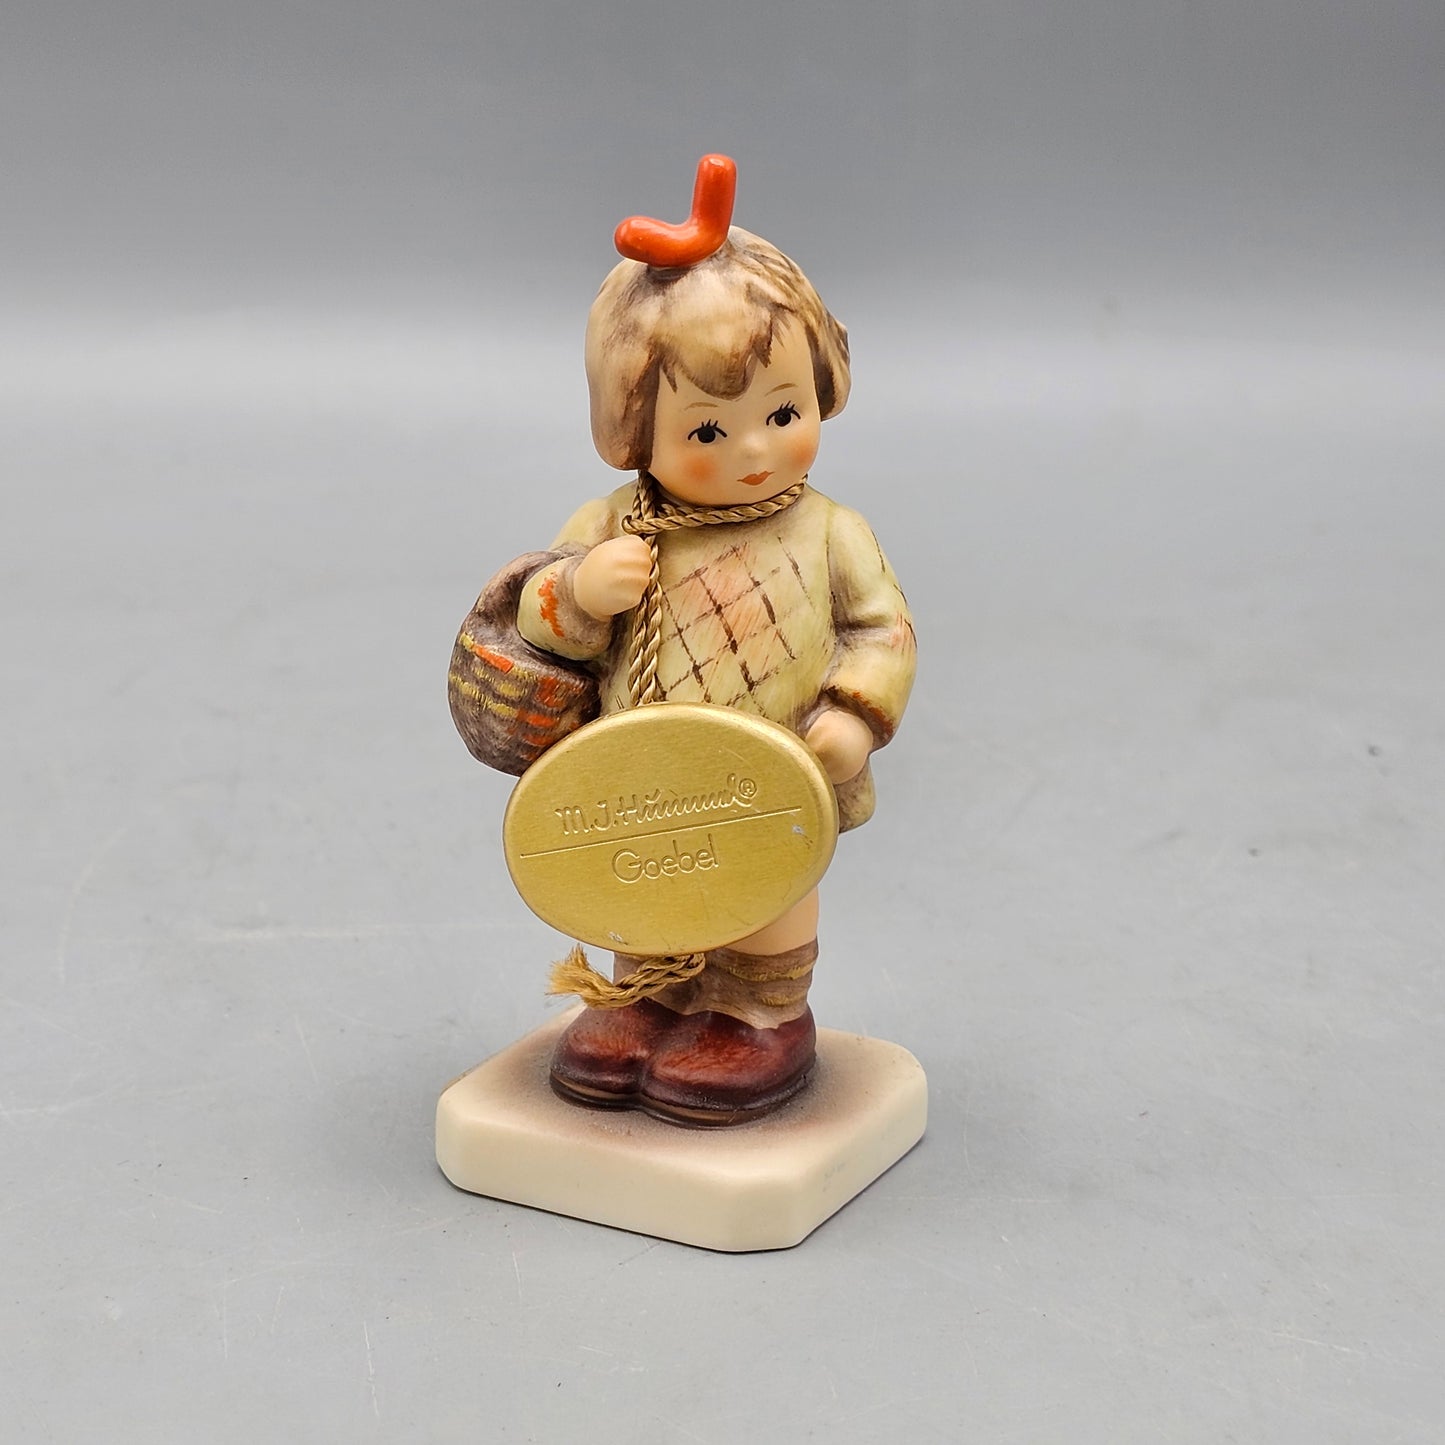 Vintage Hummel Goebel Figurine "I Brought You A Gift" MI Hummel Club with Tag